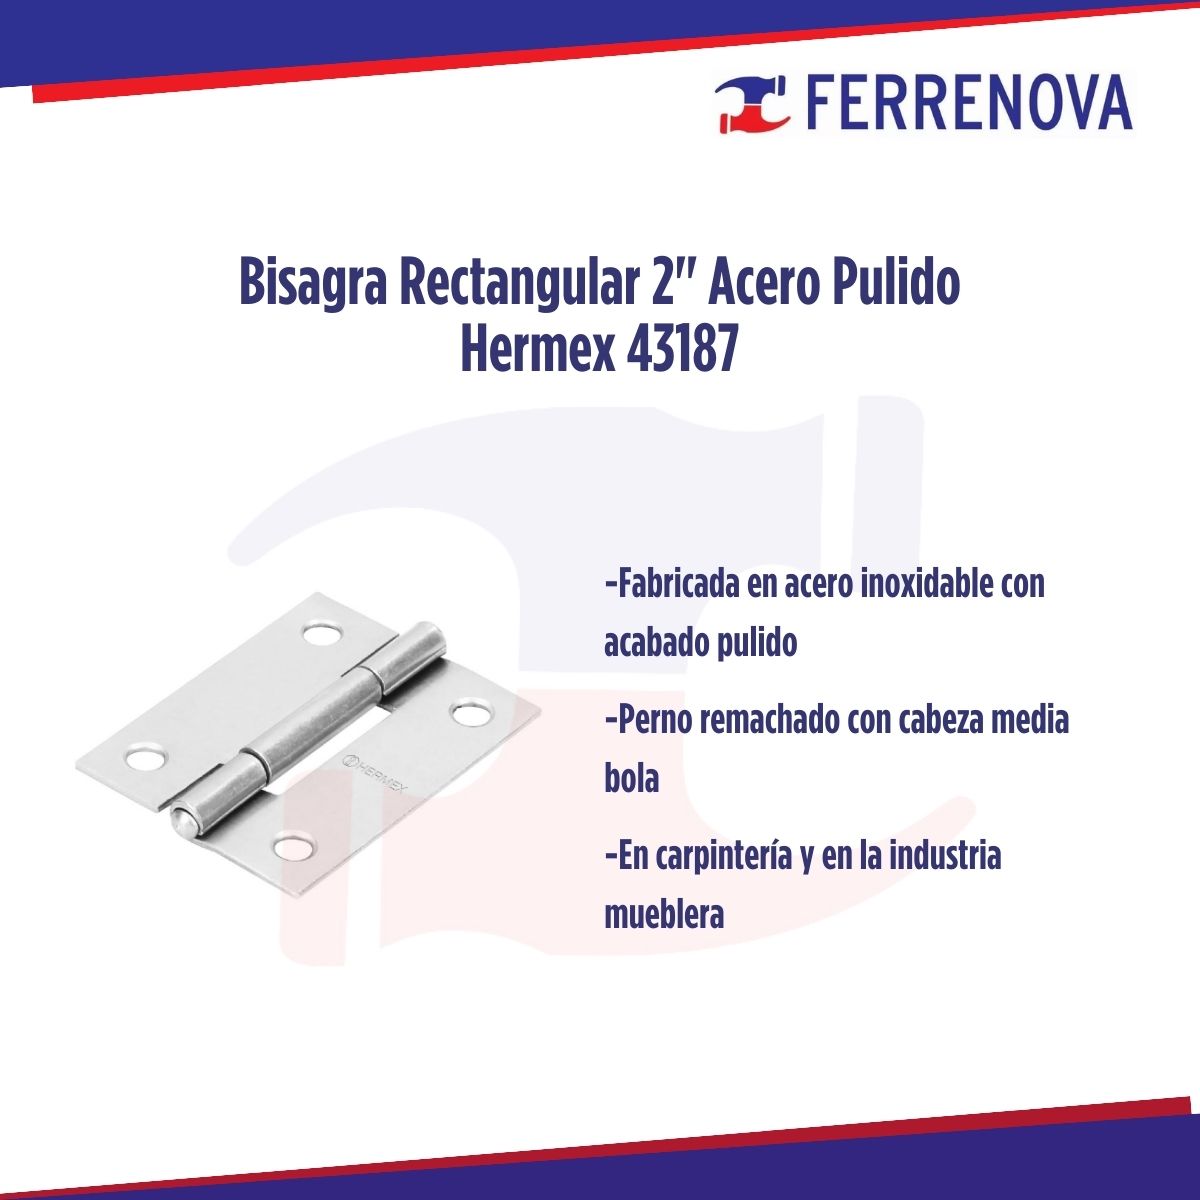 Bisagra Rectangular 2" Acero Pulido Hermex 43187